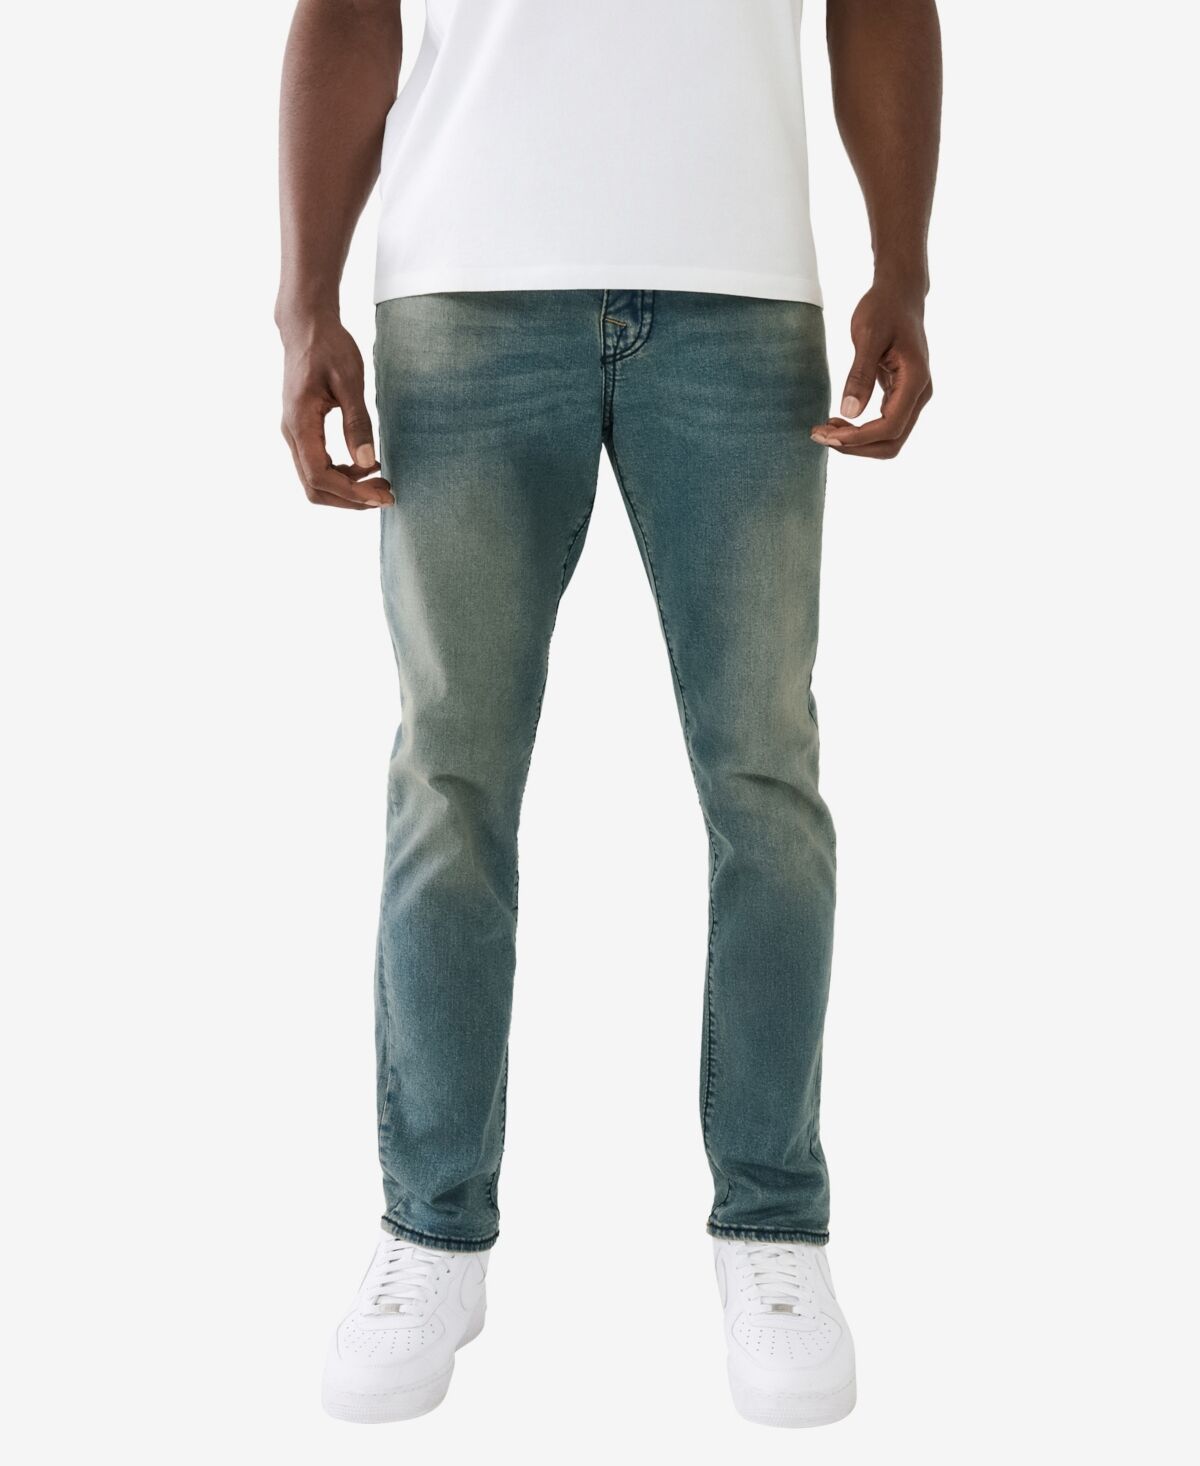 True Religion Men's Rocco Flap Big T Skinny Jeans - Lightning Medium Wash